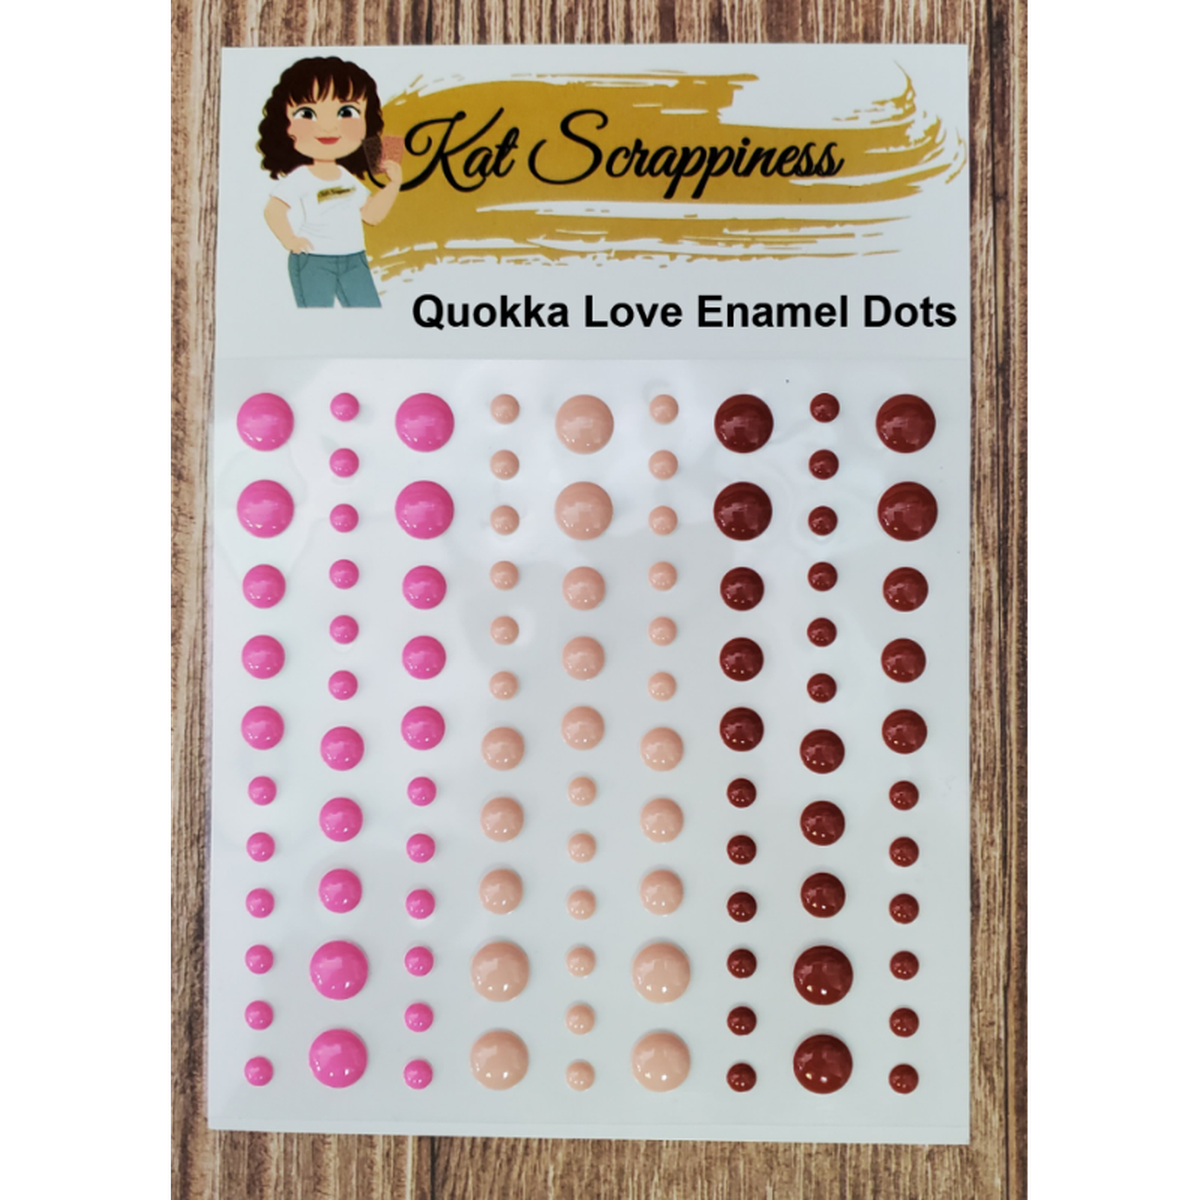 Quokka Love Enamel Dots